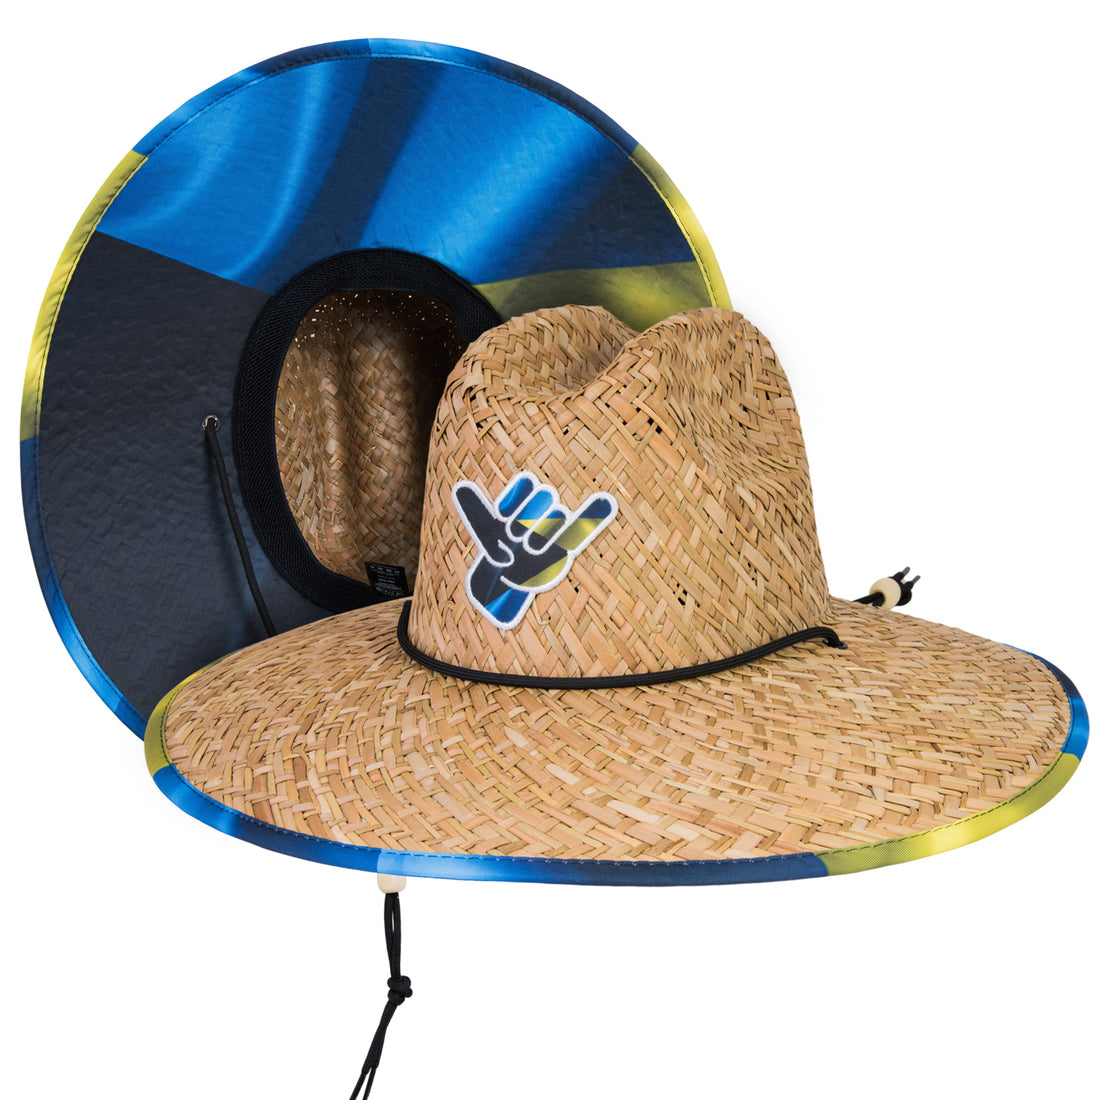 Bahamas Pride Straw Hat